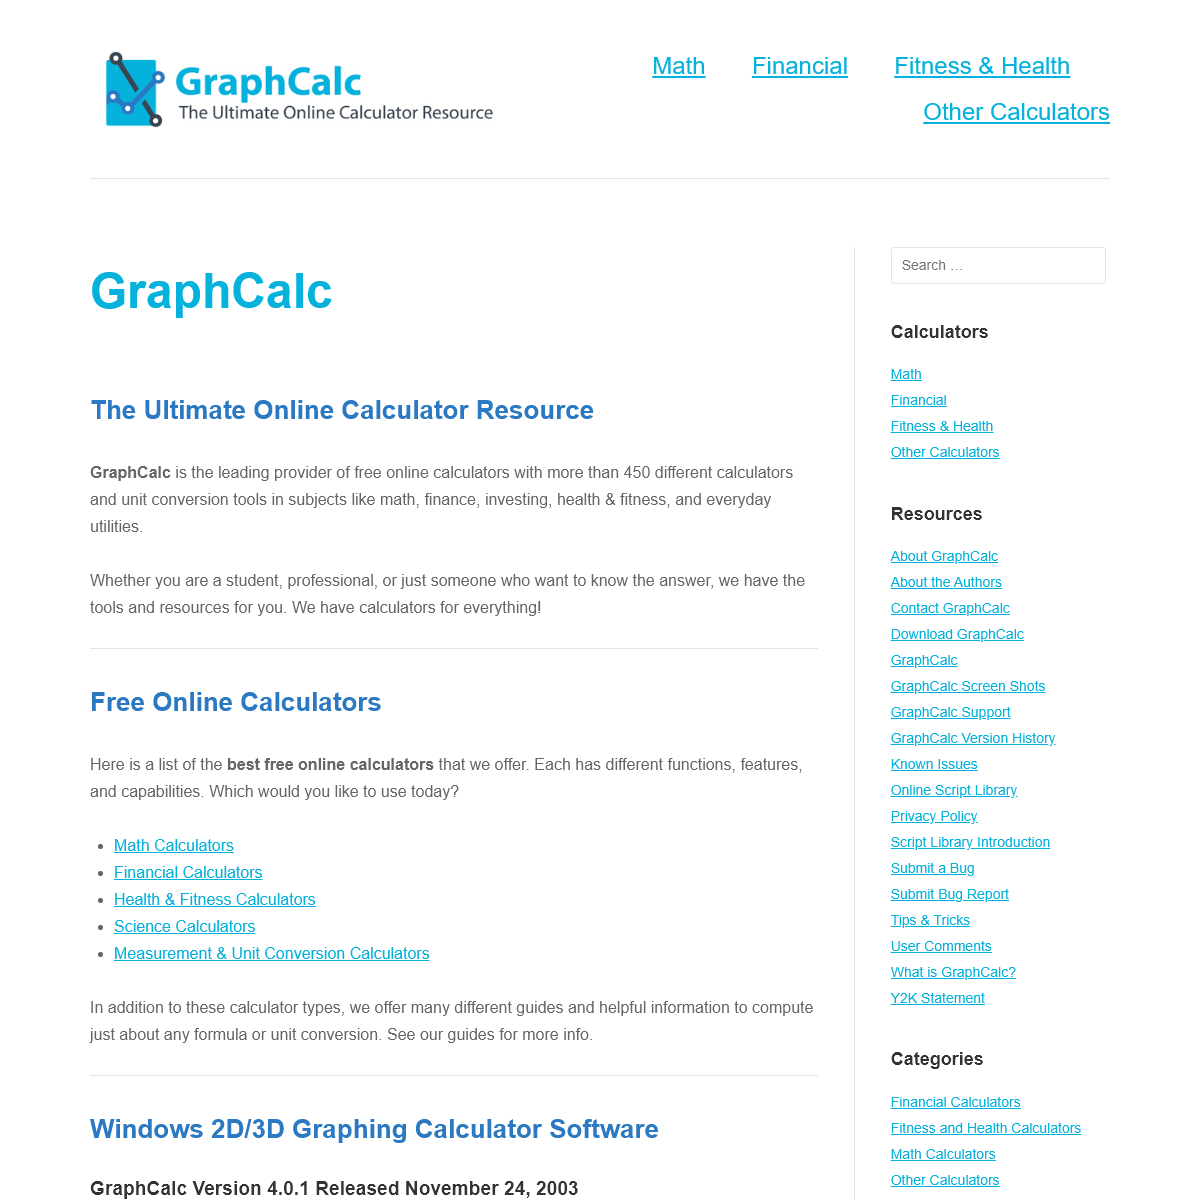 A complete backup of graphcalc.com